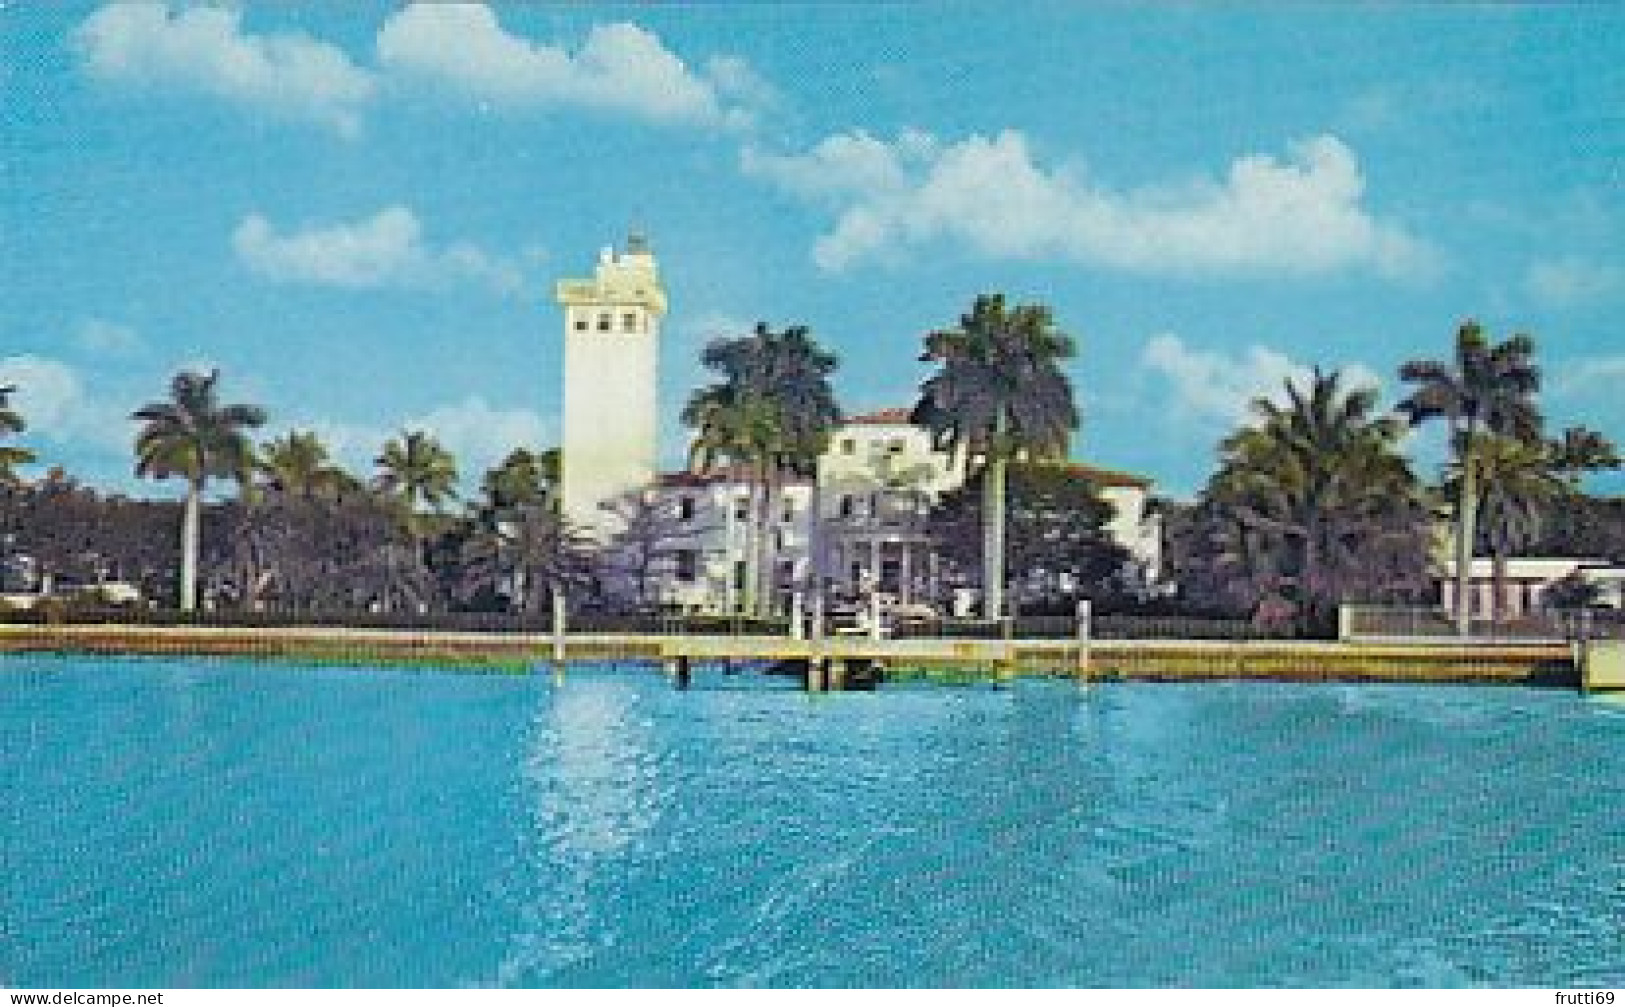 AK 164593 USA - Florida - Former Home Of The Late Carl G. Fisher Pioneer Developer Of Miami Beach - Miami Beach